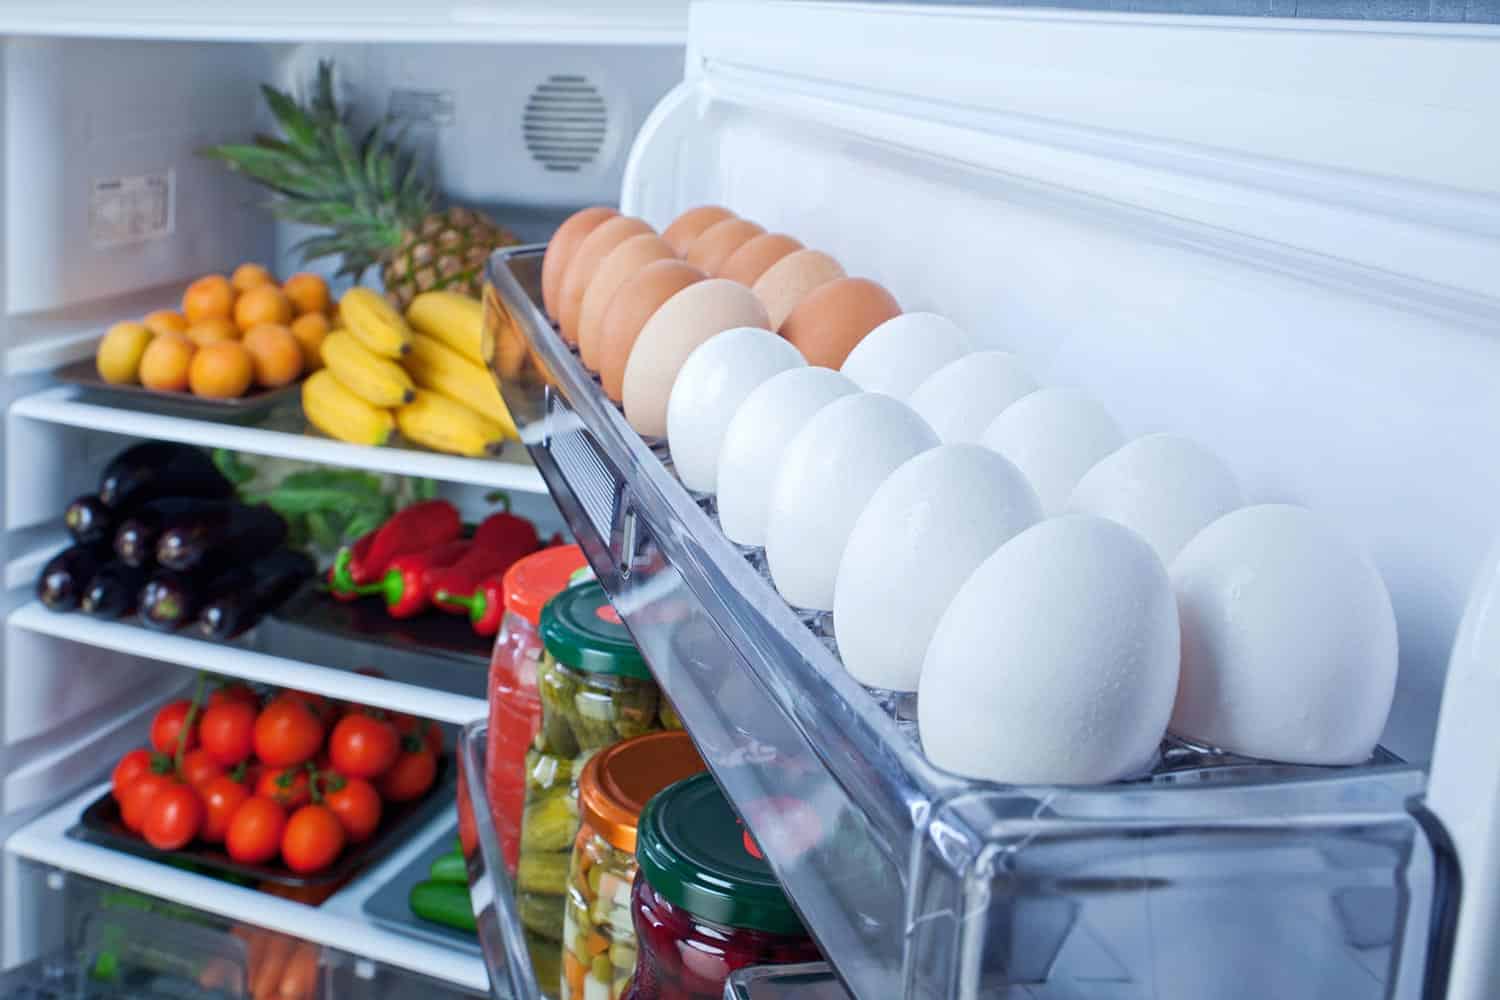 Food, vegetables and beverage in refrigerator